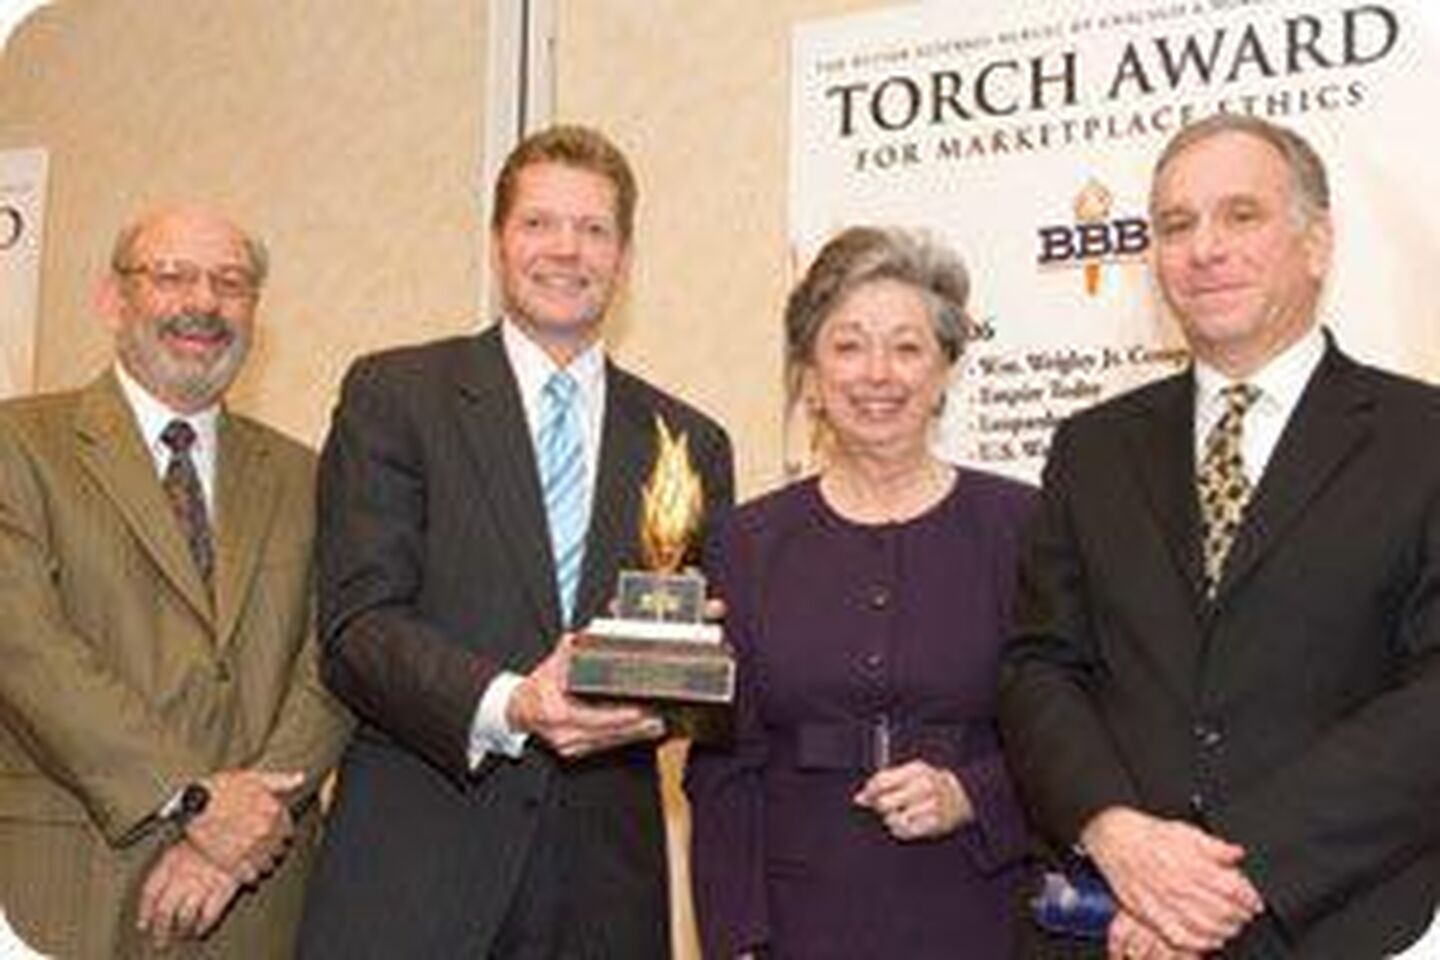 Better Business Bureau Torch Award presentation to U.S. Waterproofing